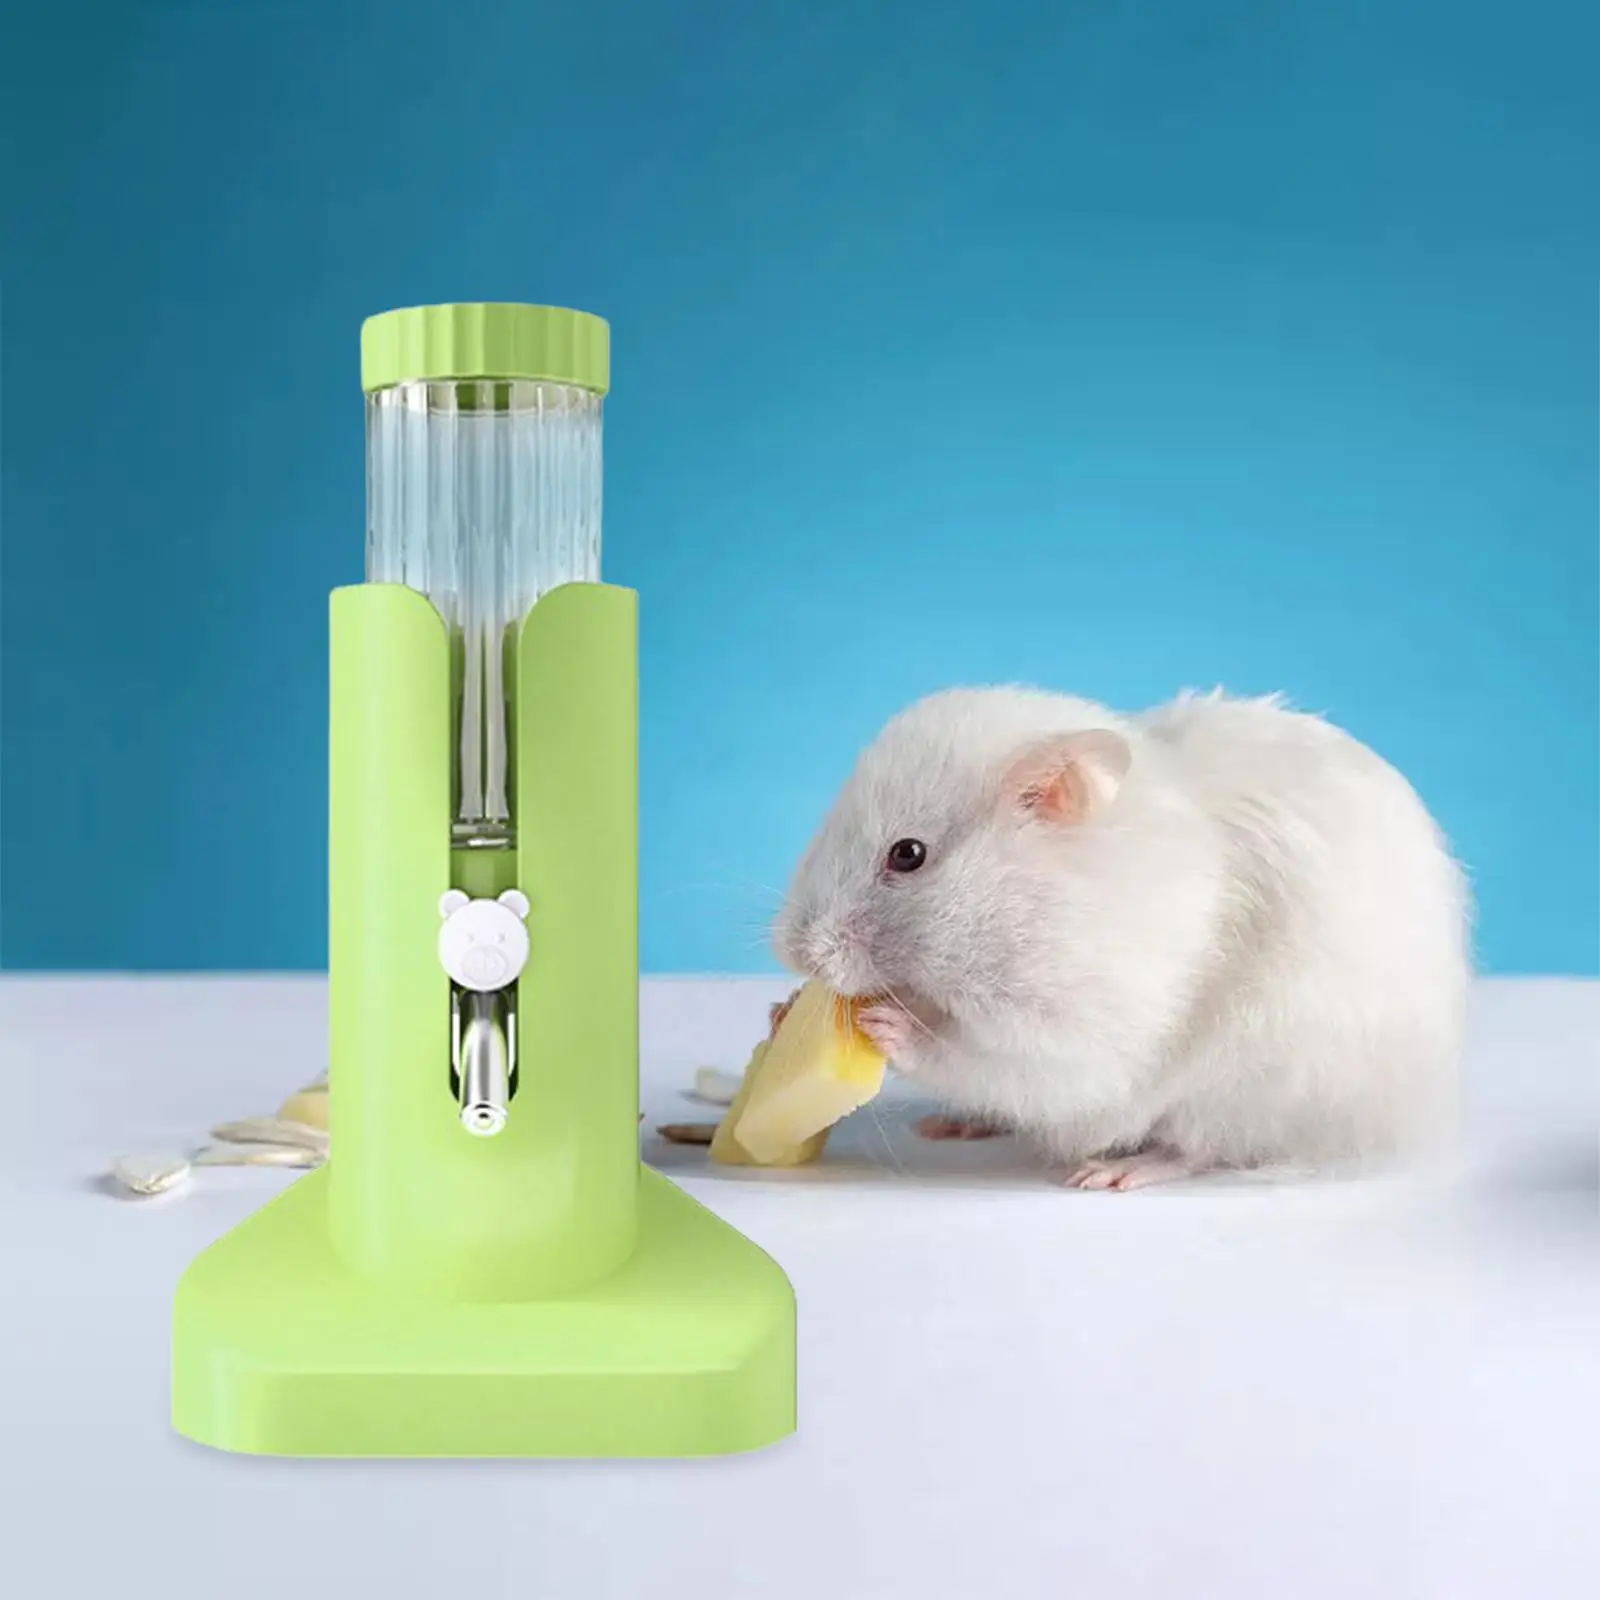 Portable Bottle Adjustable Parrots Dustproof Hamster Water Bottle with Stand